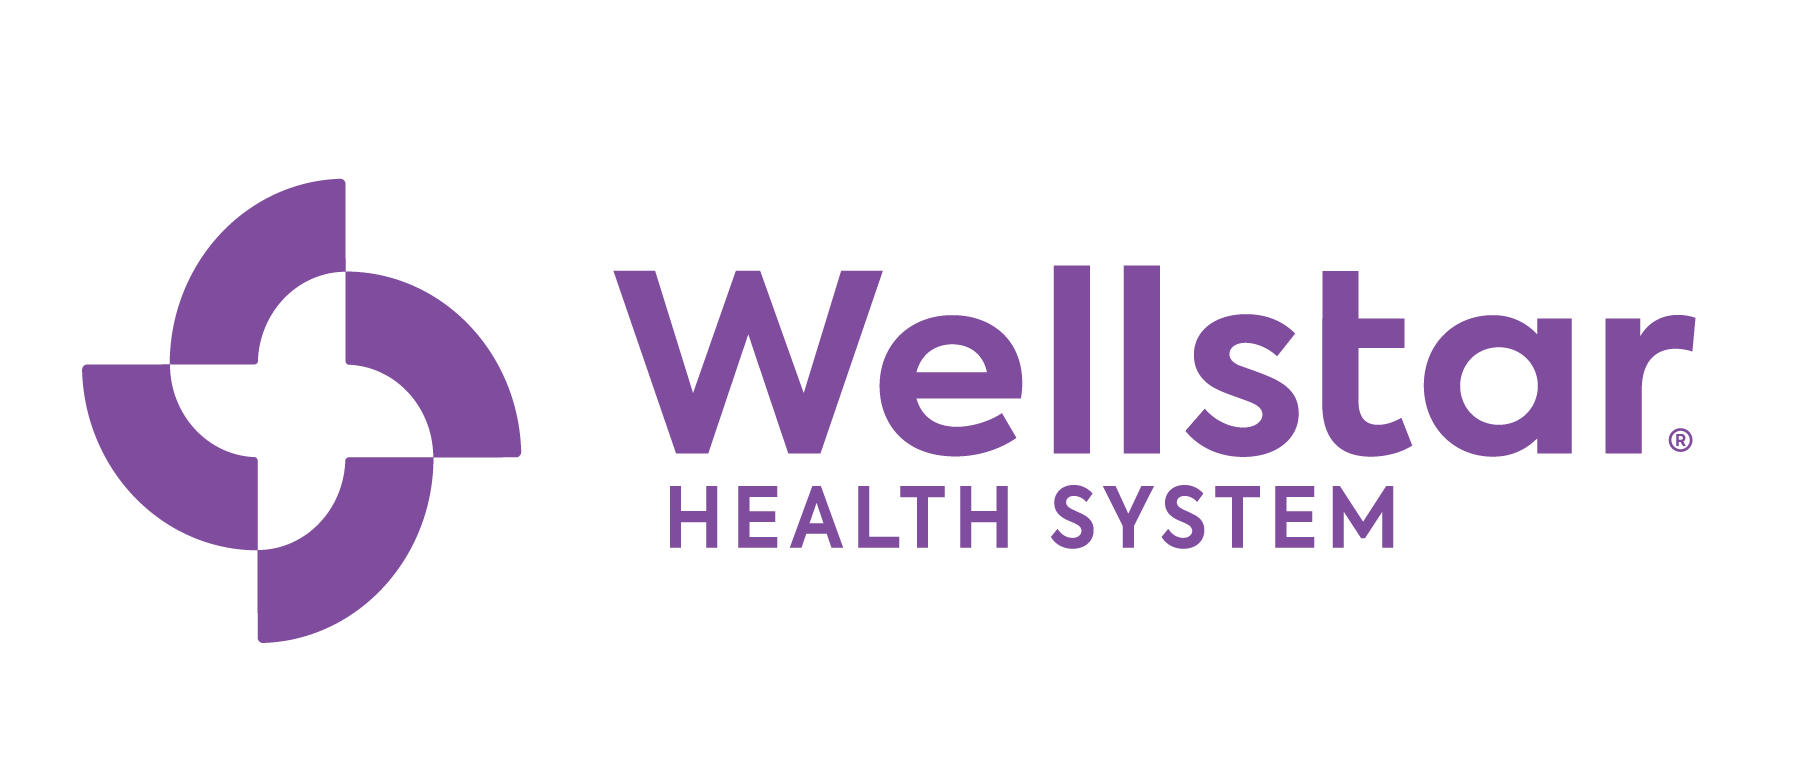 Wellstar Health System Strata Decision Technology 9088